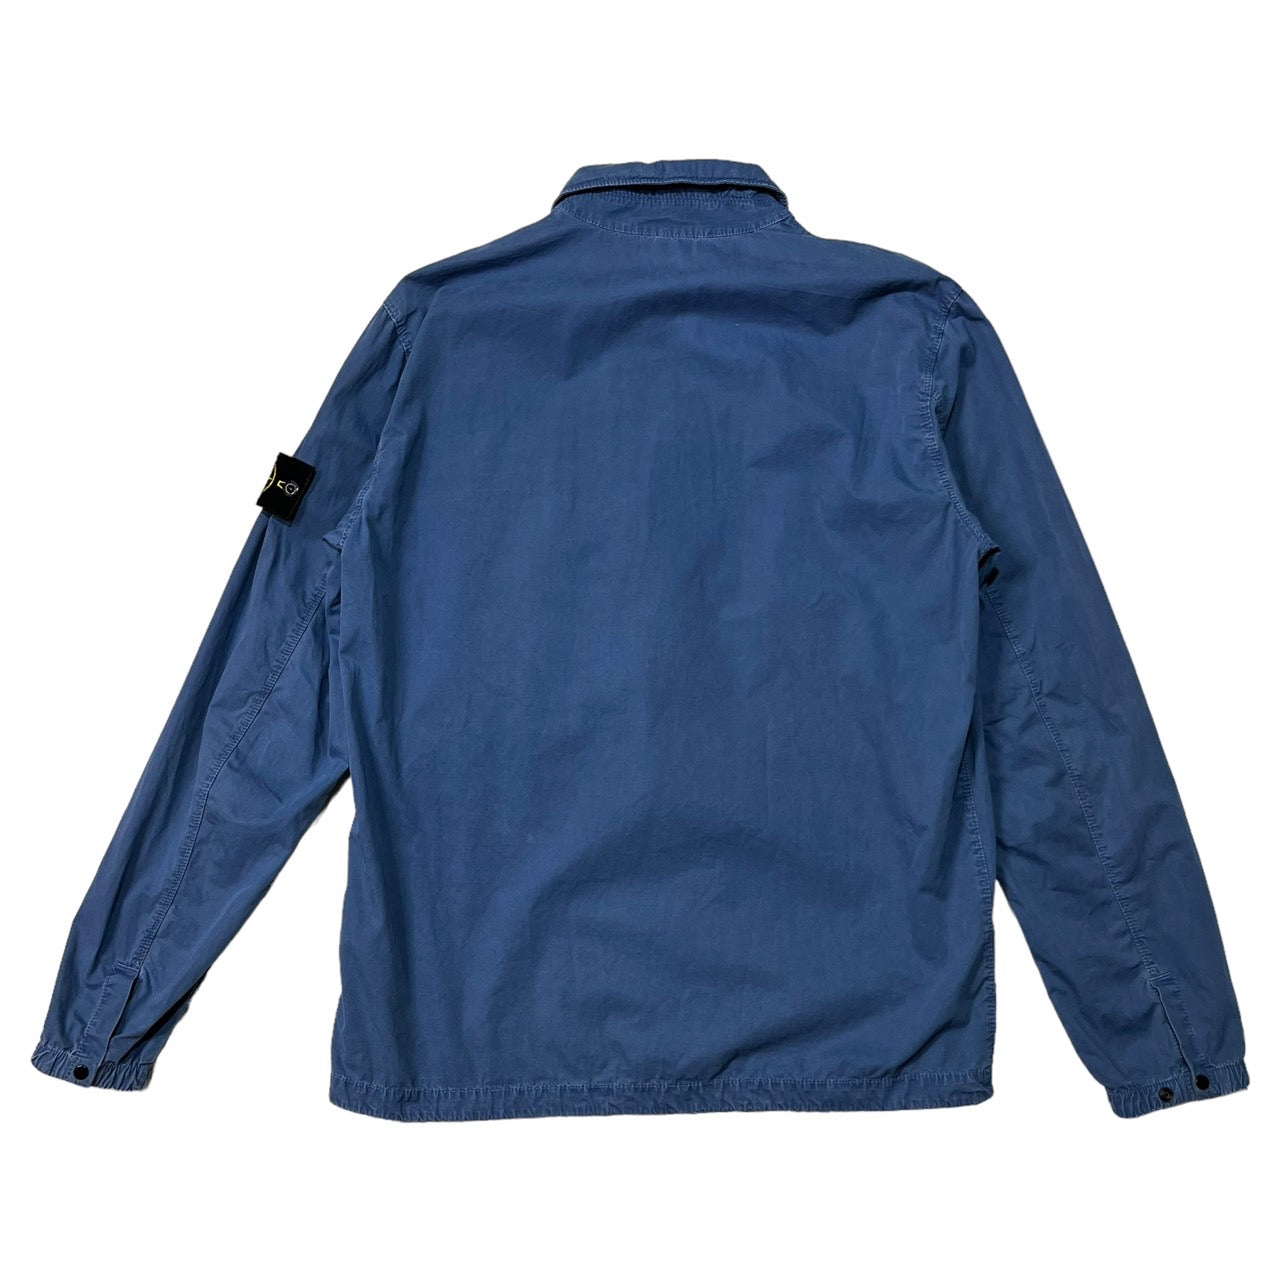 STONE ISLAND(ストーンアイランド) 20AW garment-dyed zip-up jacket